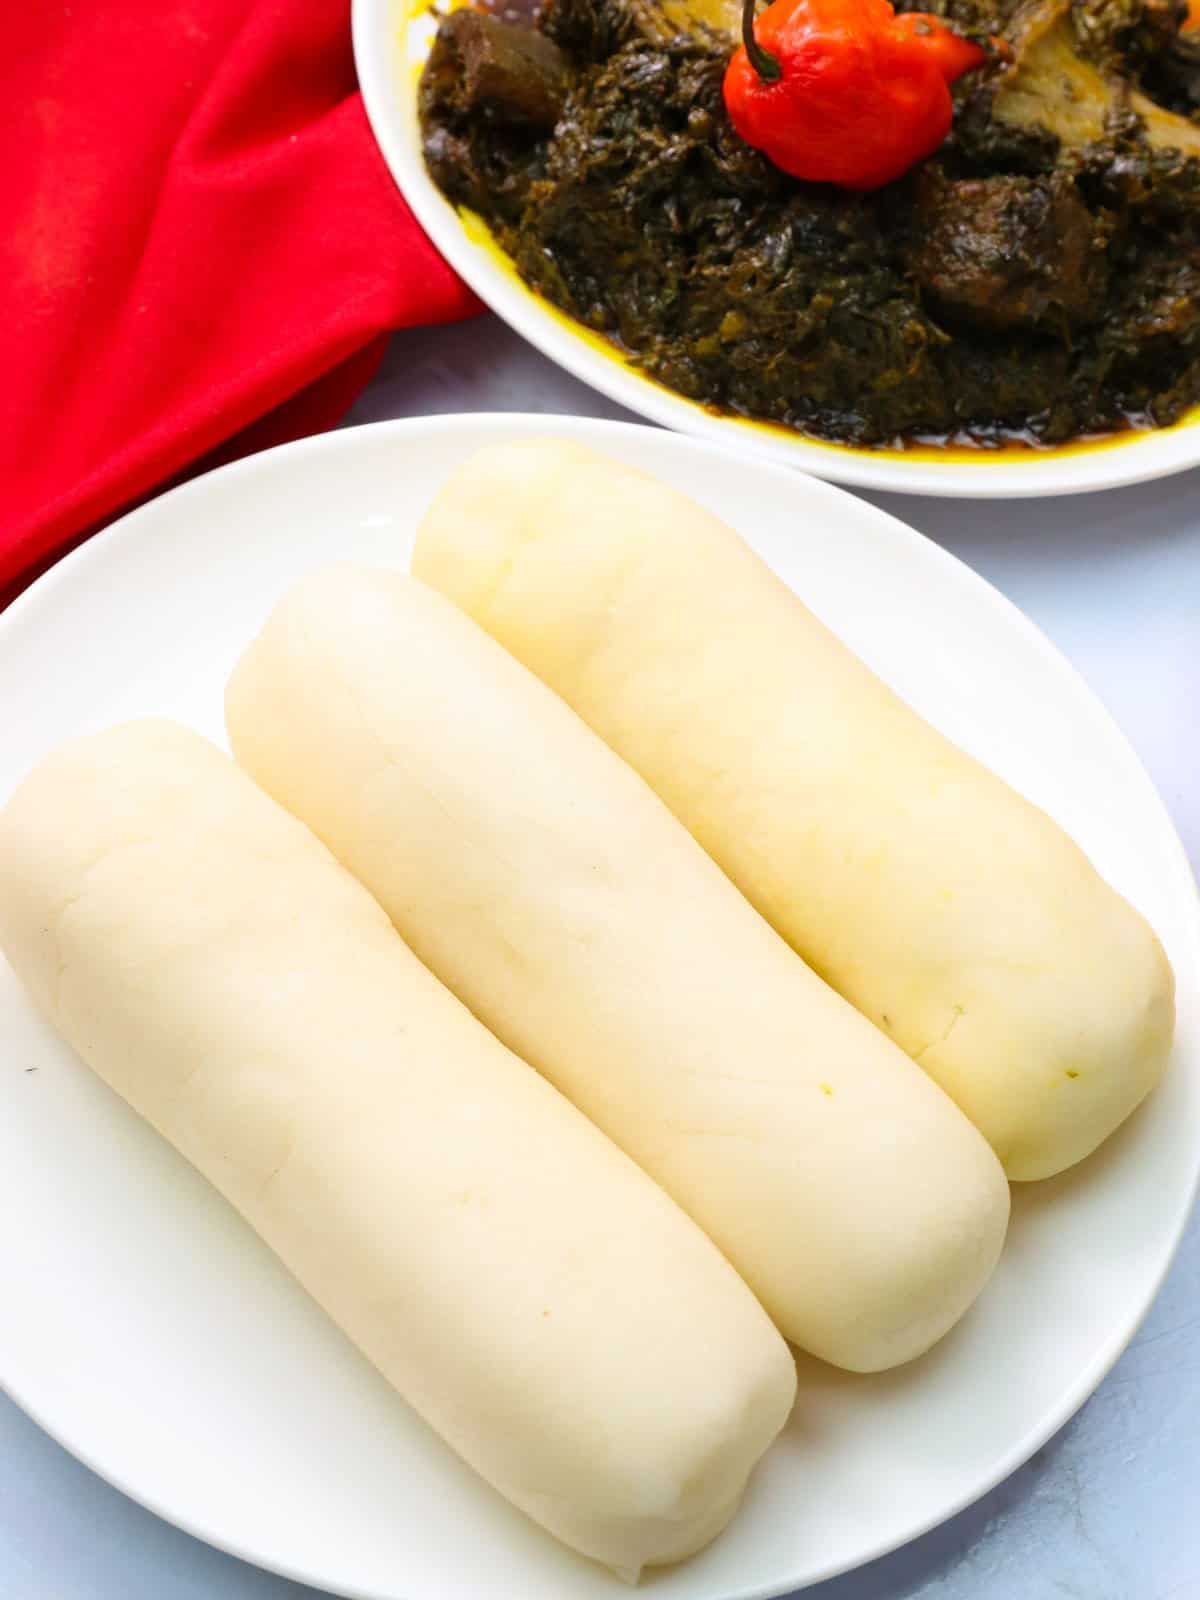 three logs of cassava fufu on a white plate